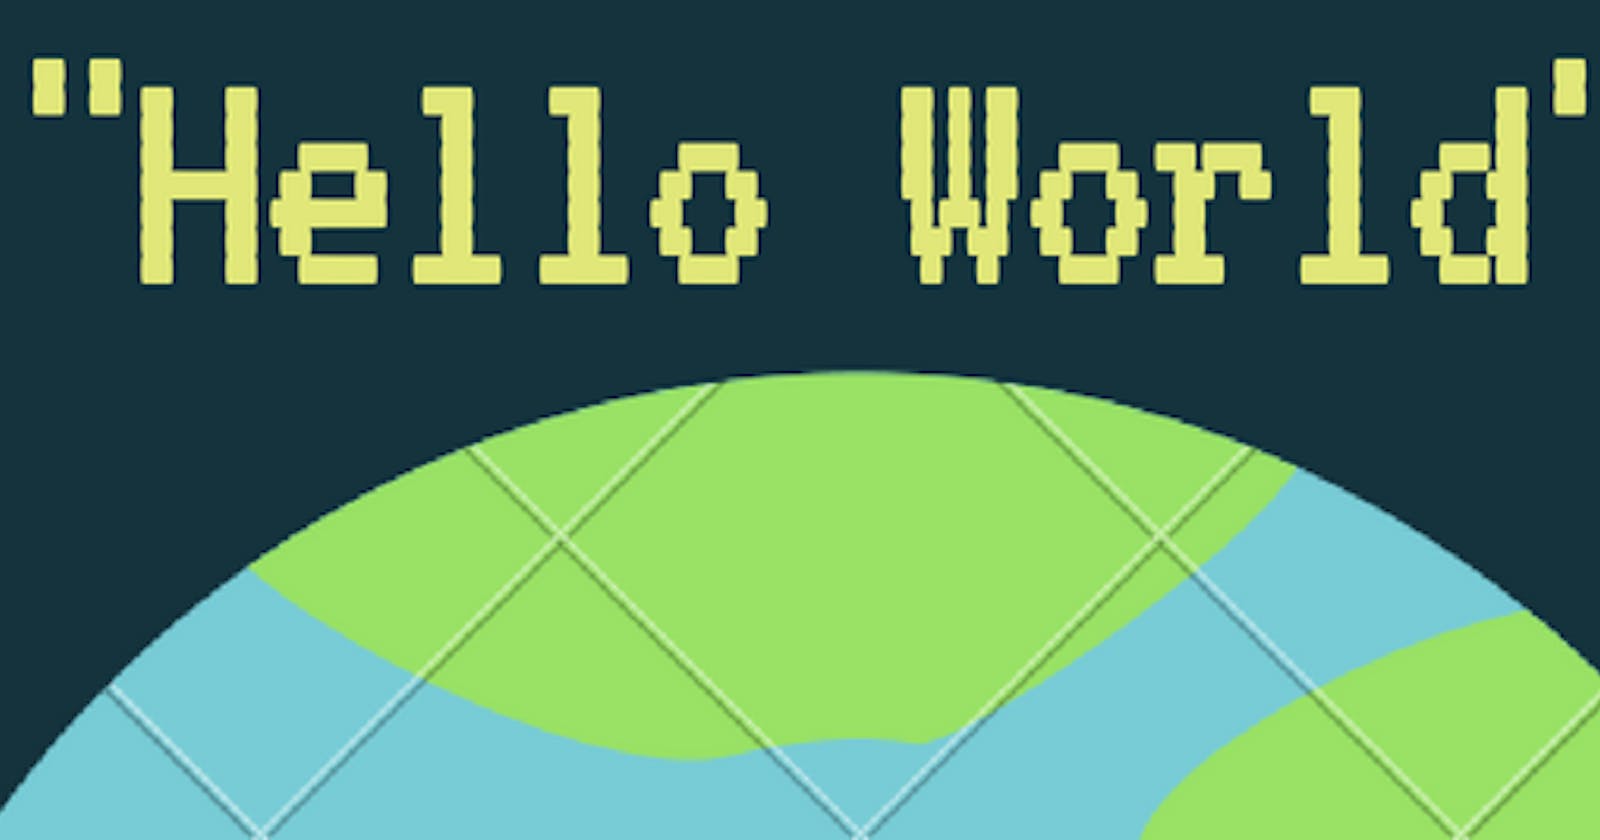 Hello World: A Beginner's Guide